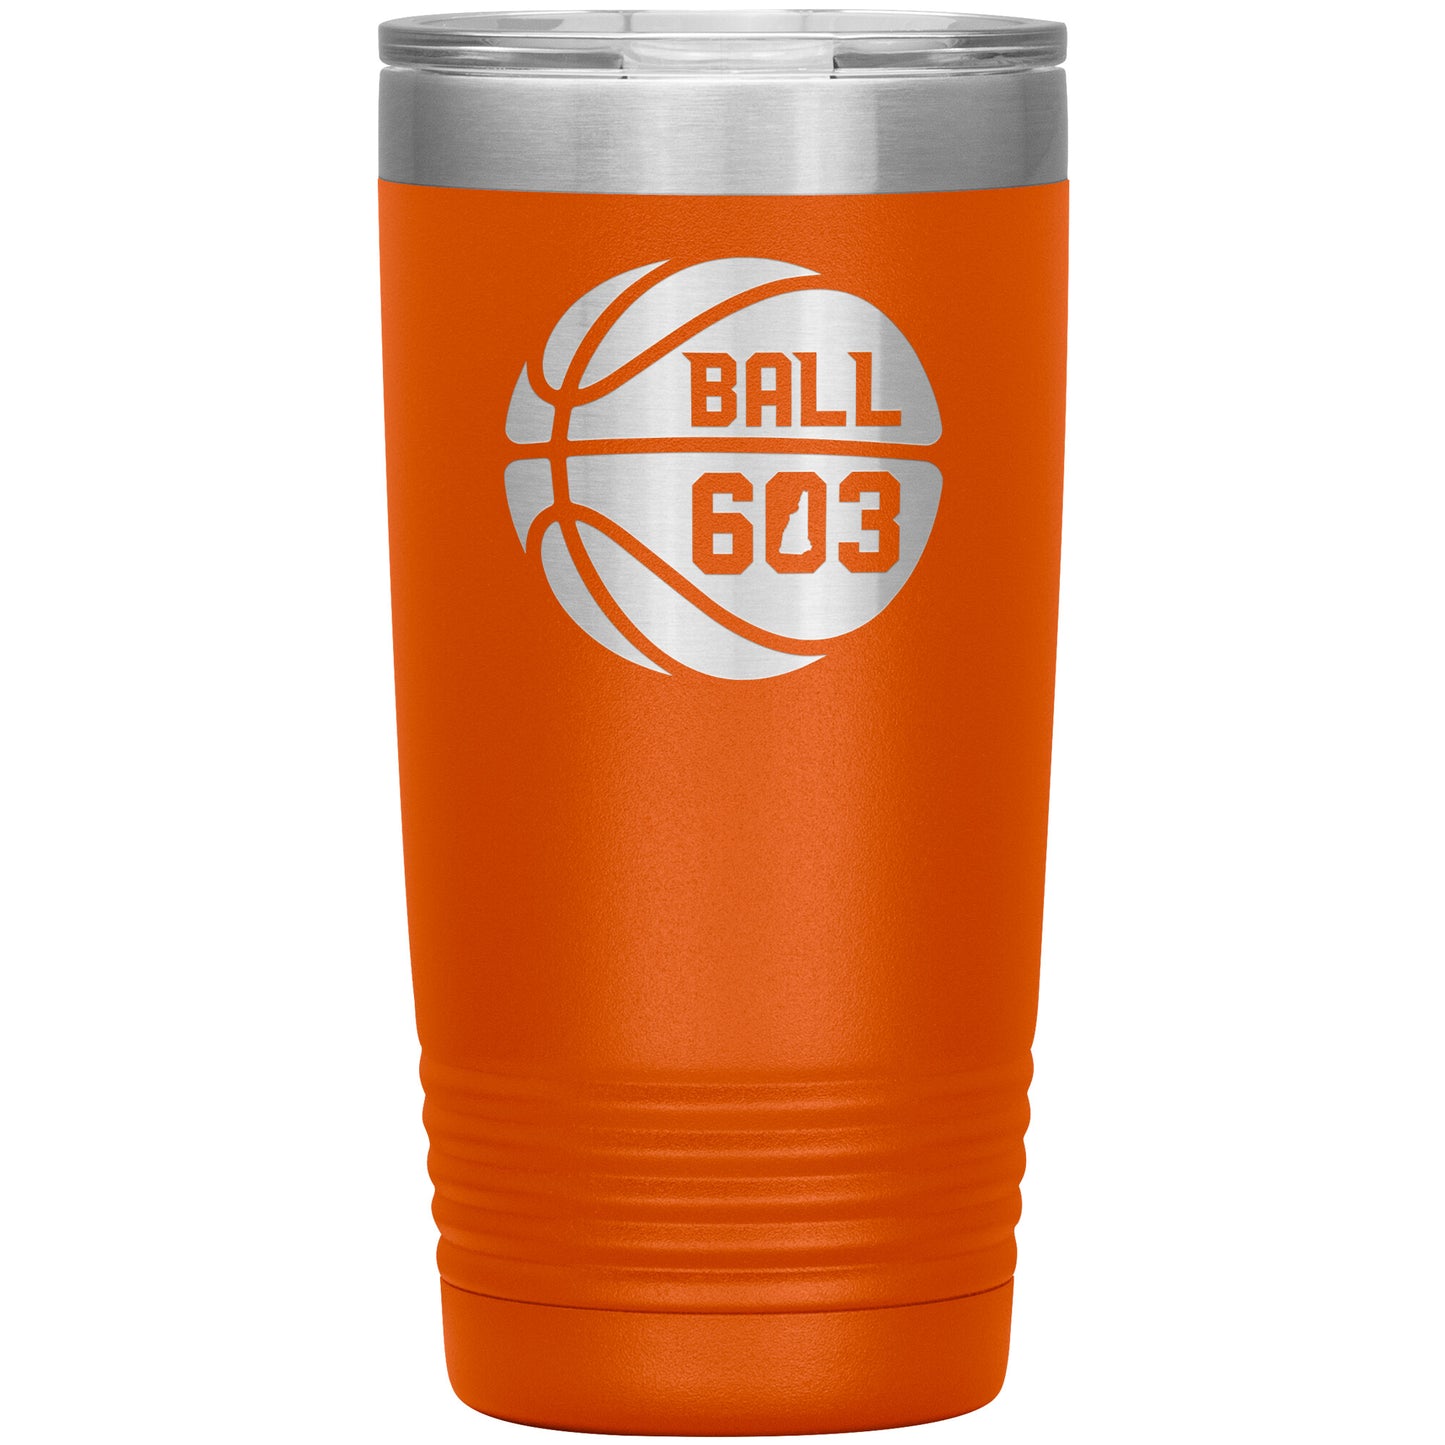 Ball 603 Insulated Tumbler (20 oz)